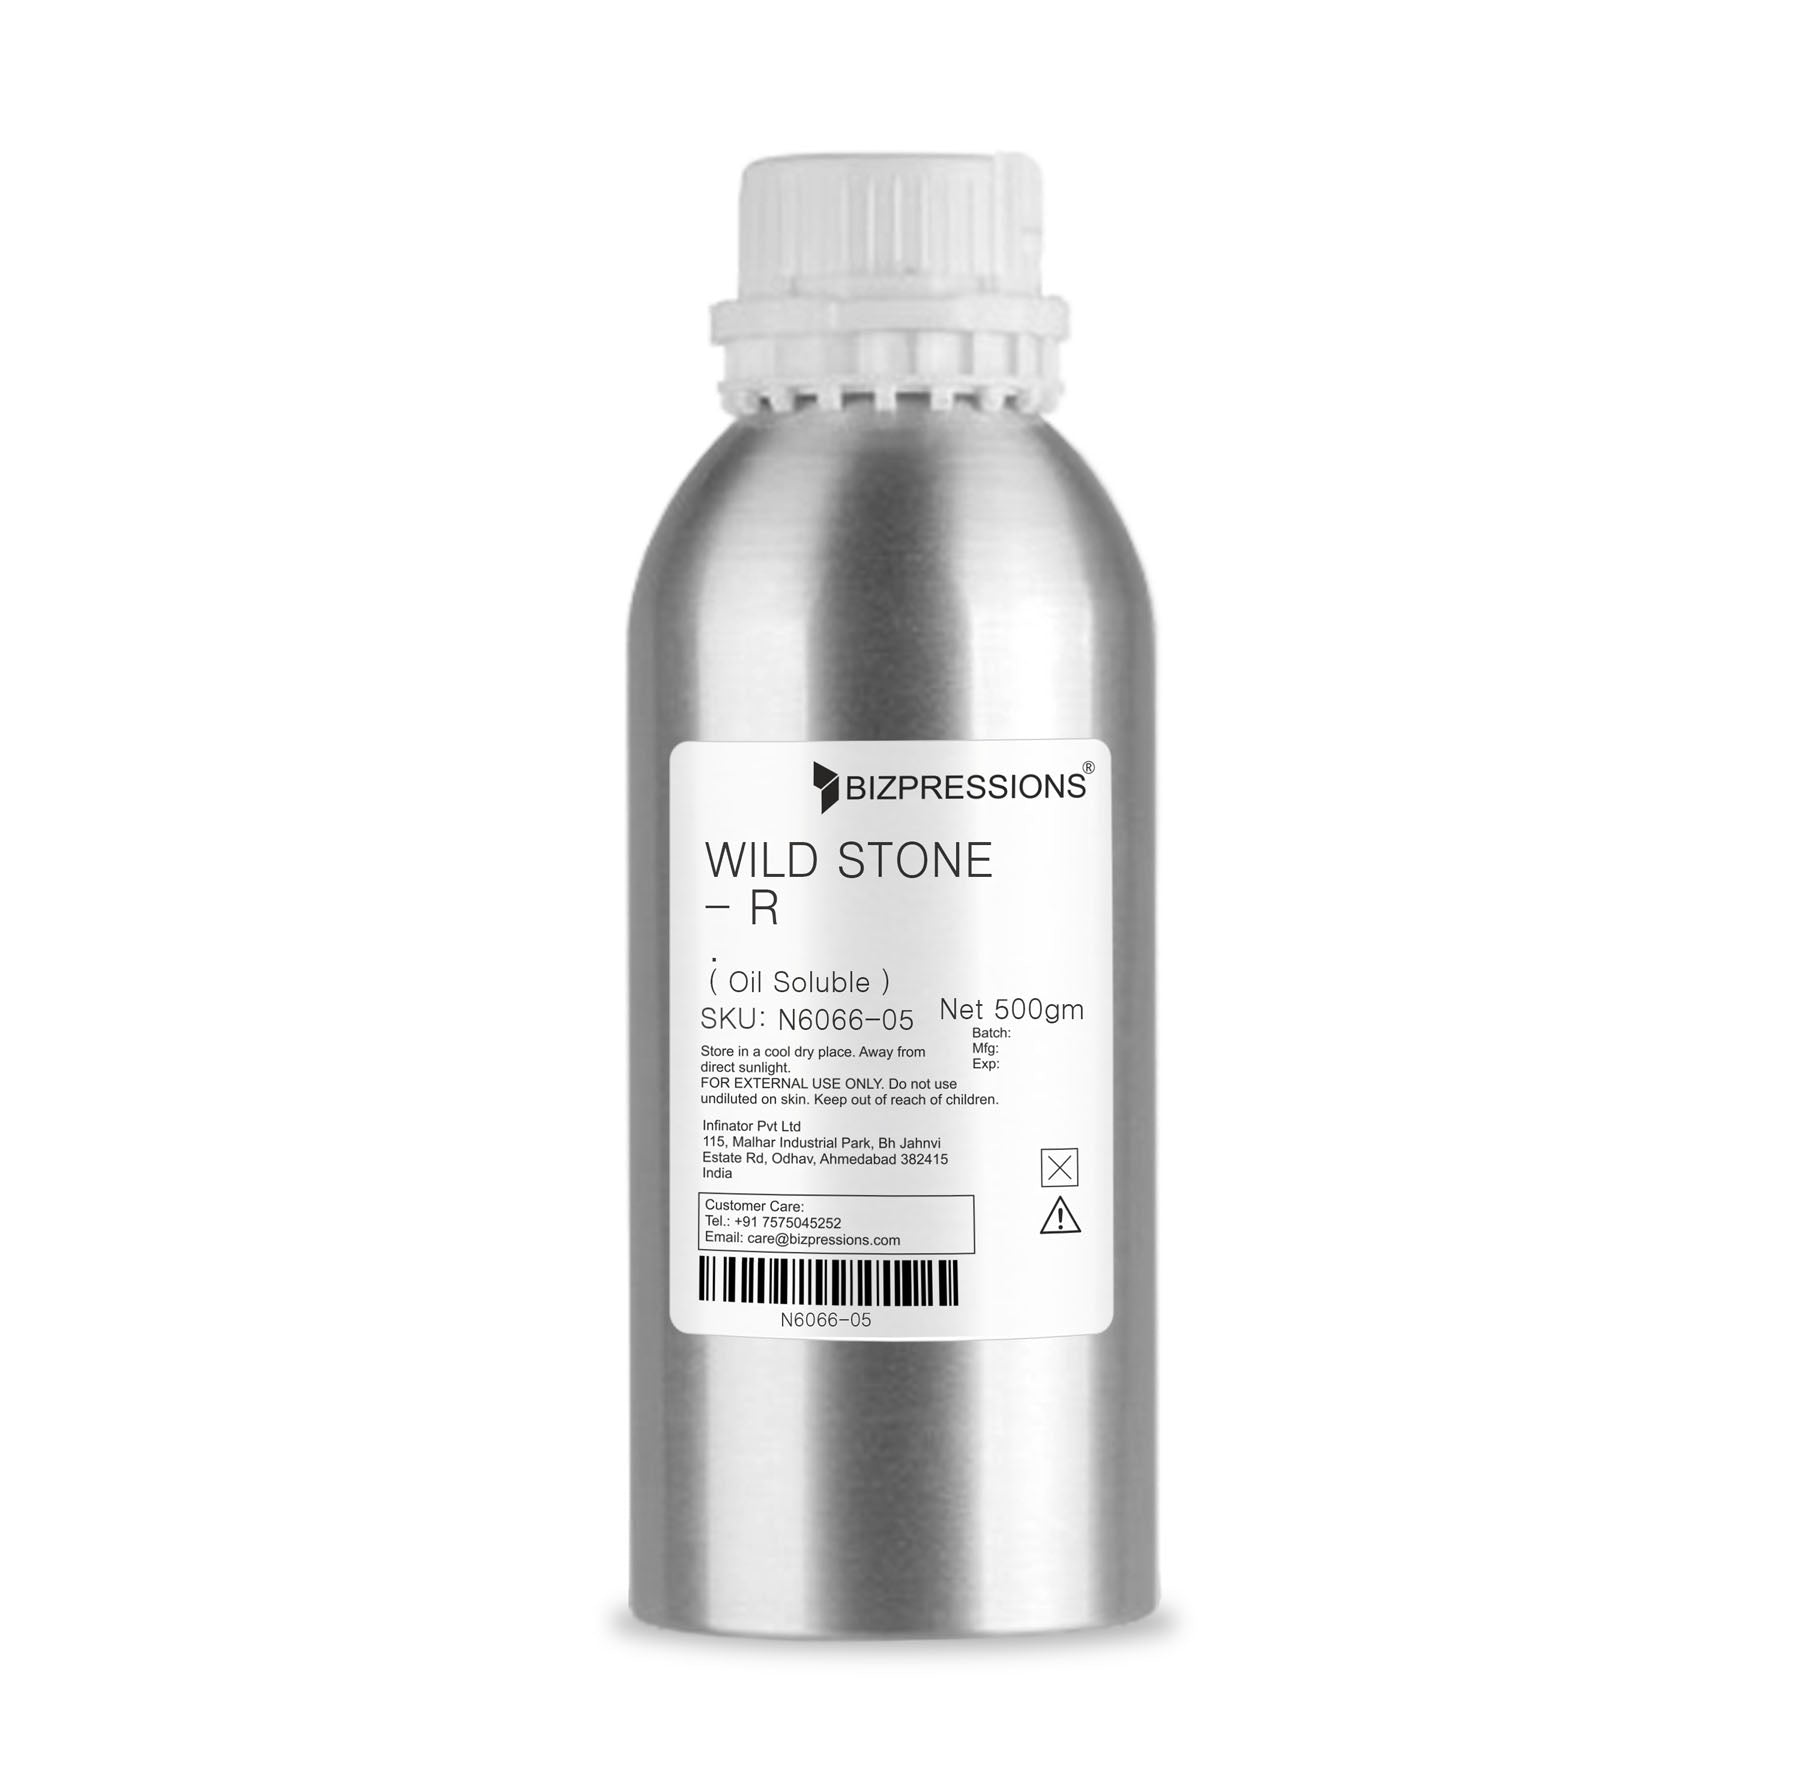 WILD STONE - R - Fragrance ( Oil Soluble ) - 500 gm